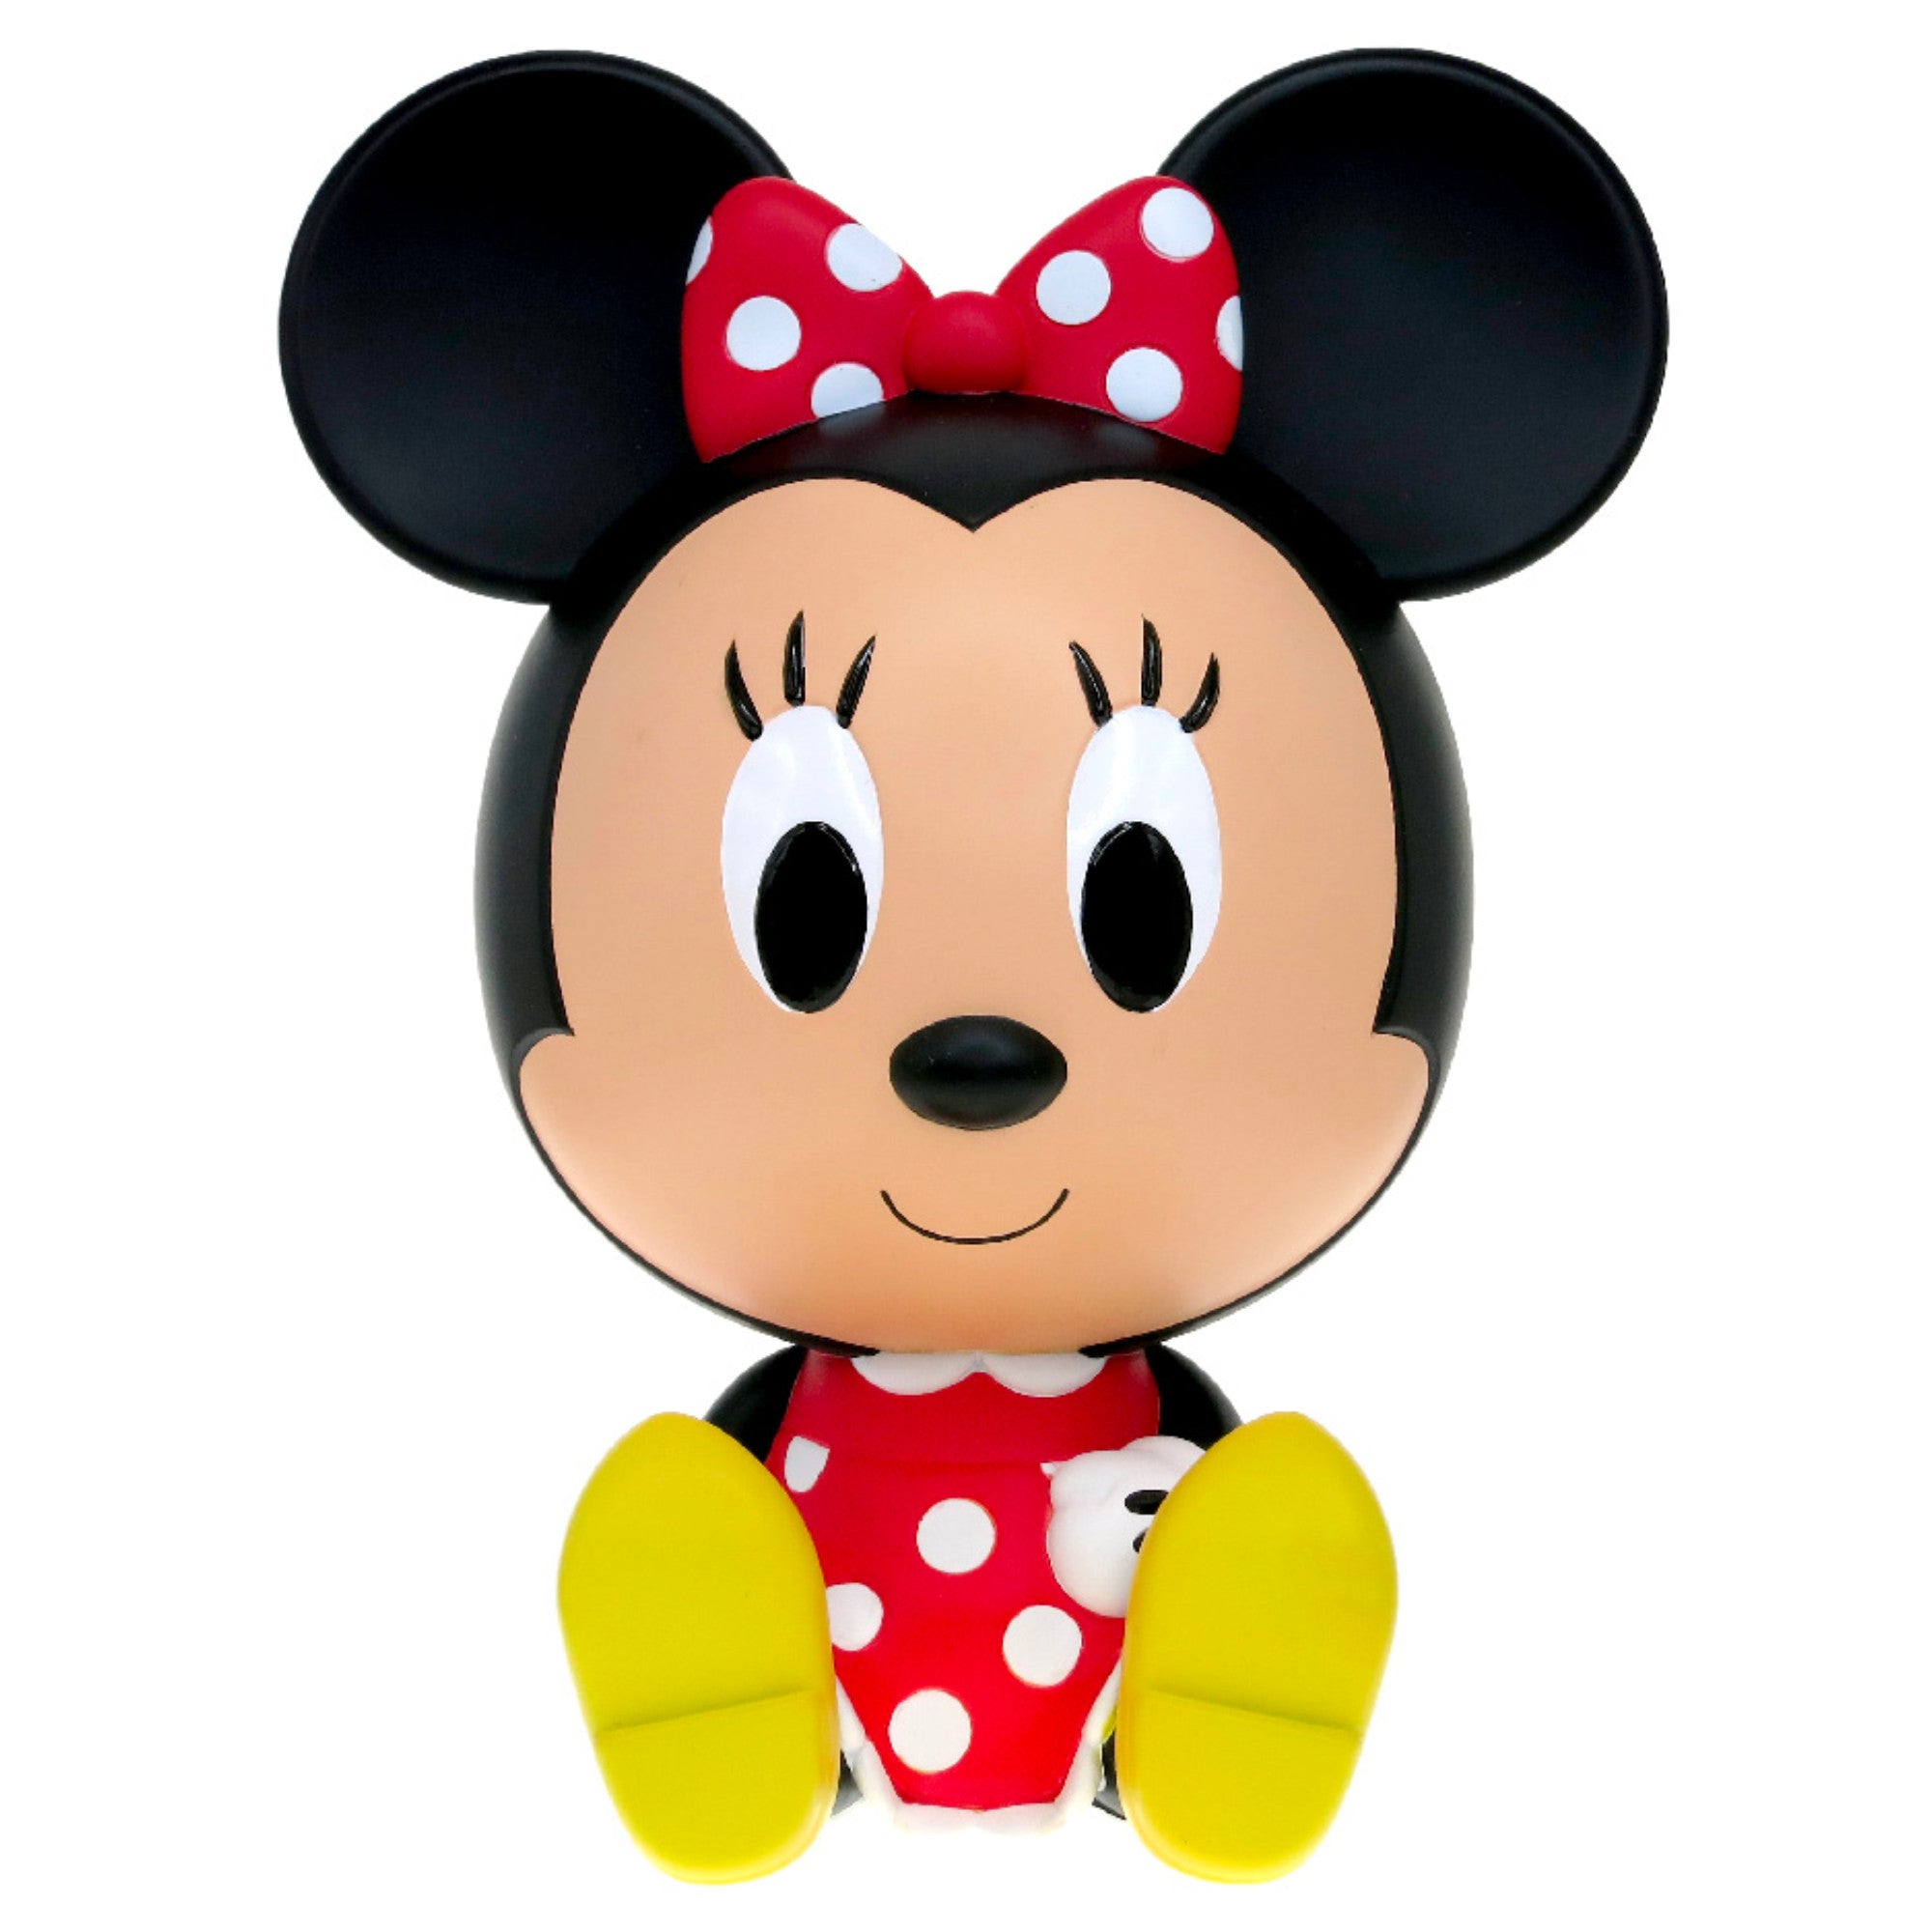 Disney Minnie Mouse Bank